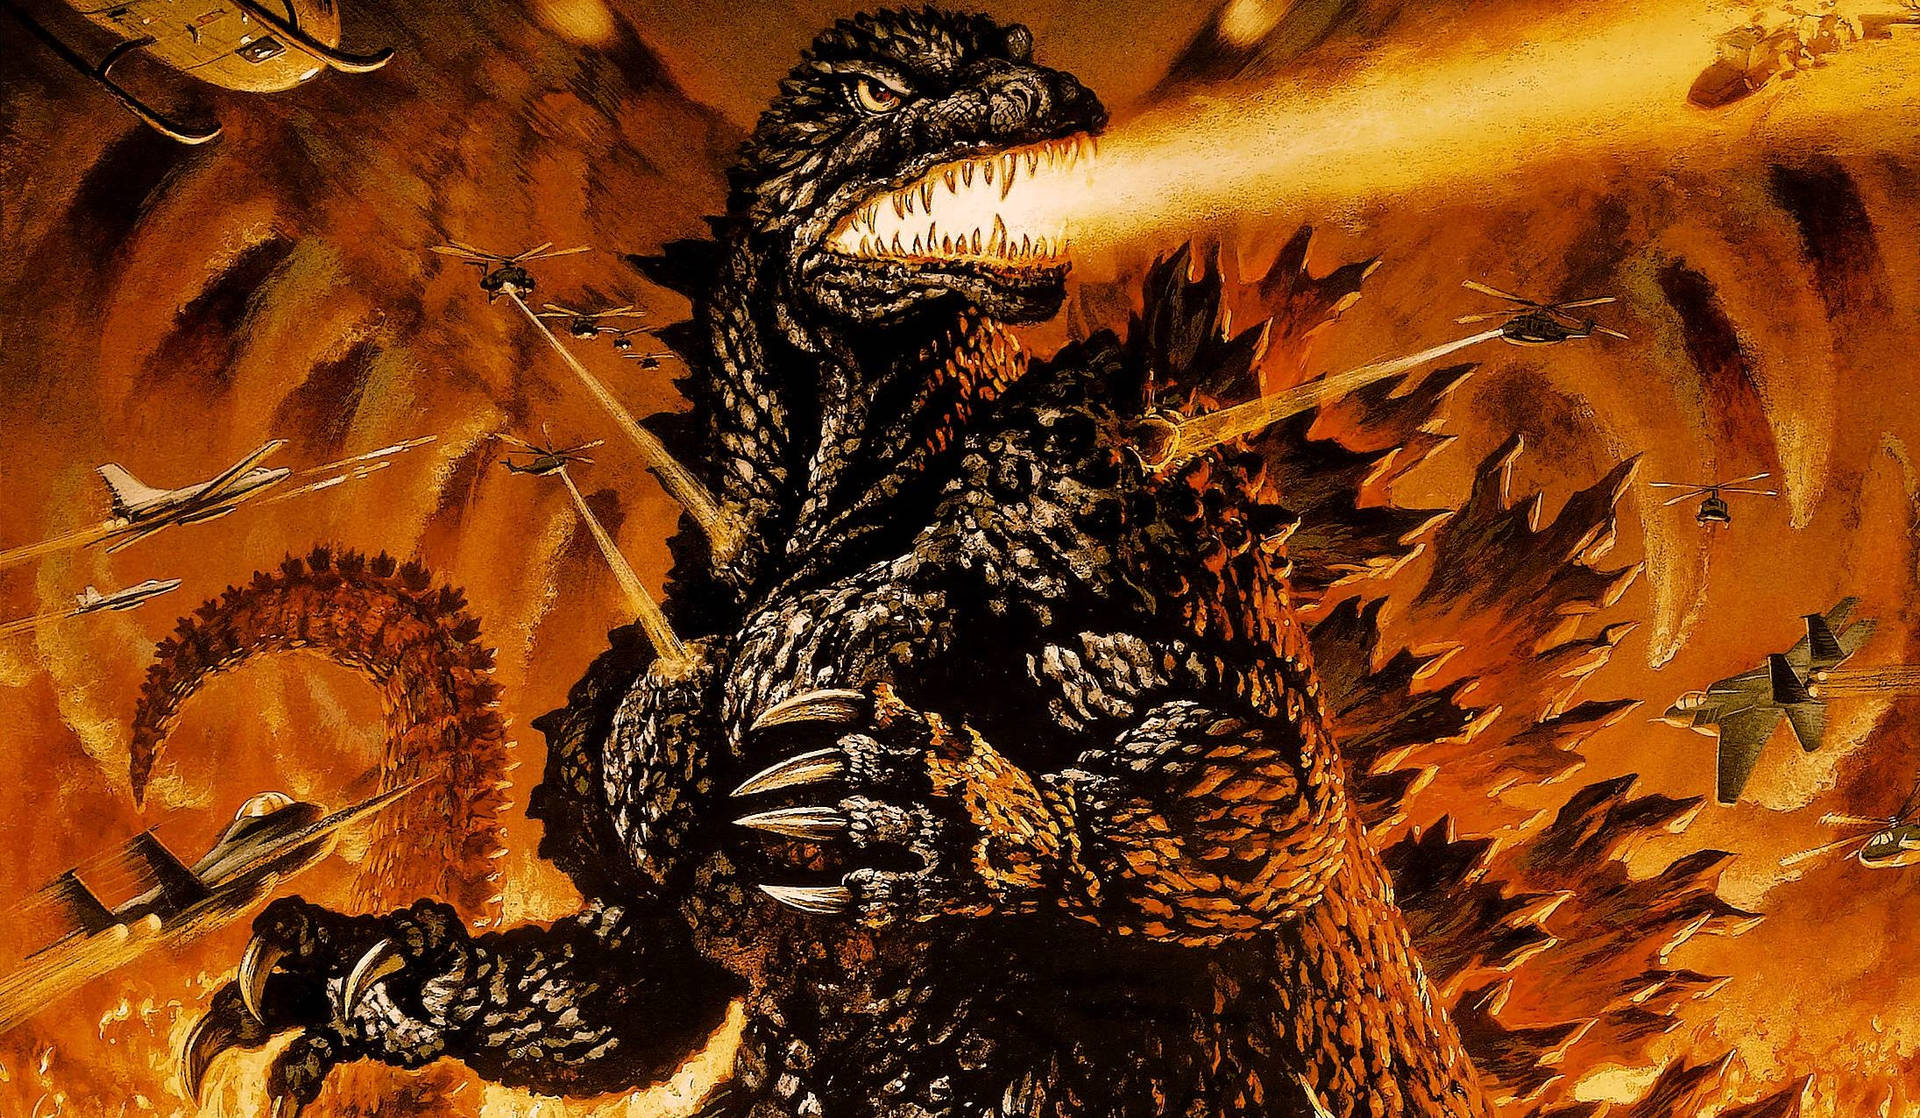 Free Godzilla 4k Wallpaper Downloads, [100+] Godzilla 4k Wallpapers for  FREE 